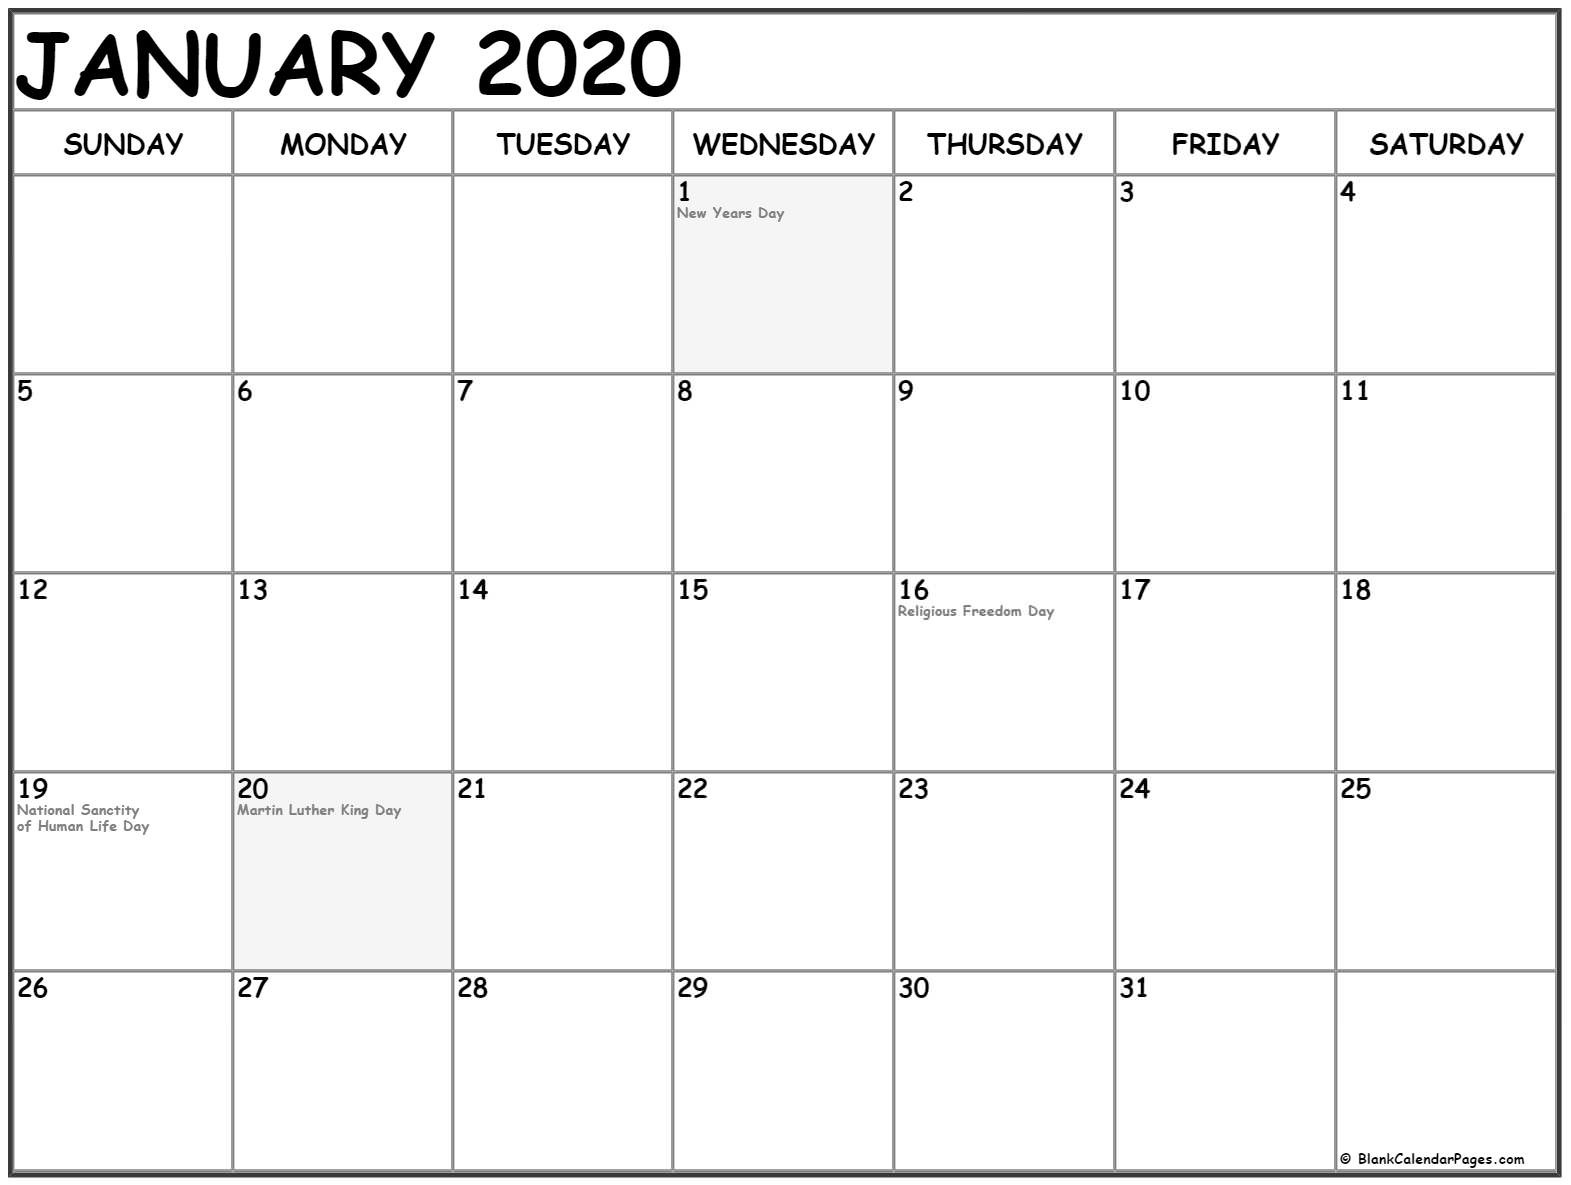 Collection Of January 2020 Calendars With Holidays-January 2020 Calendar Usa